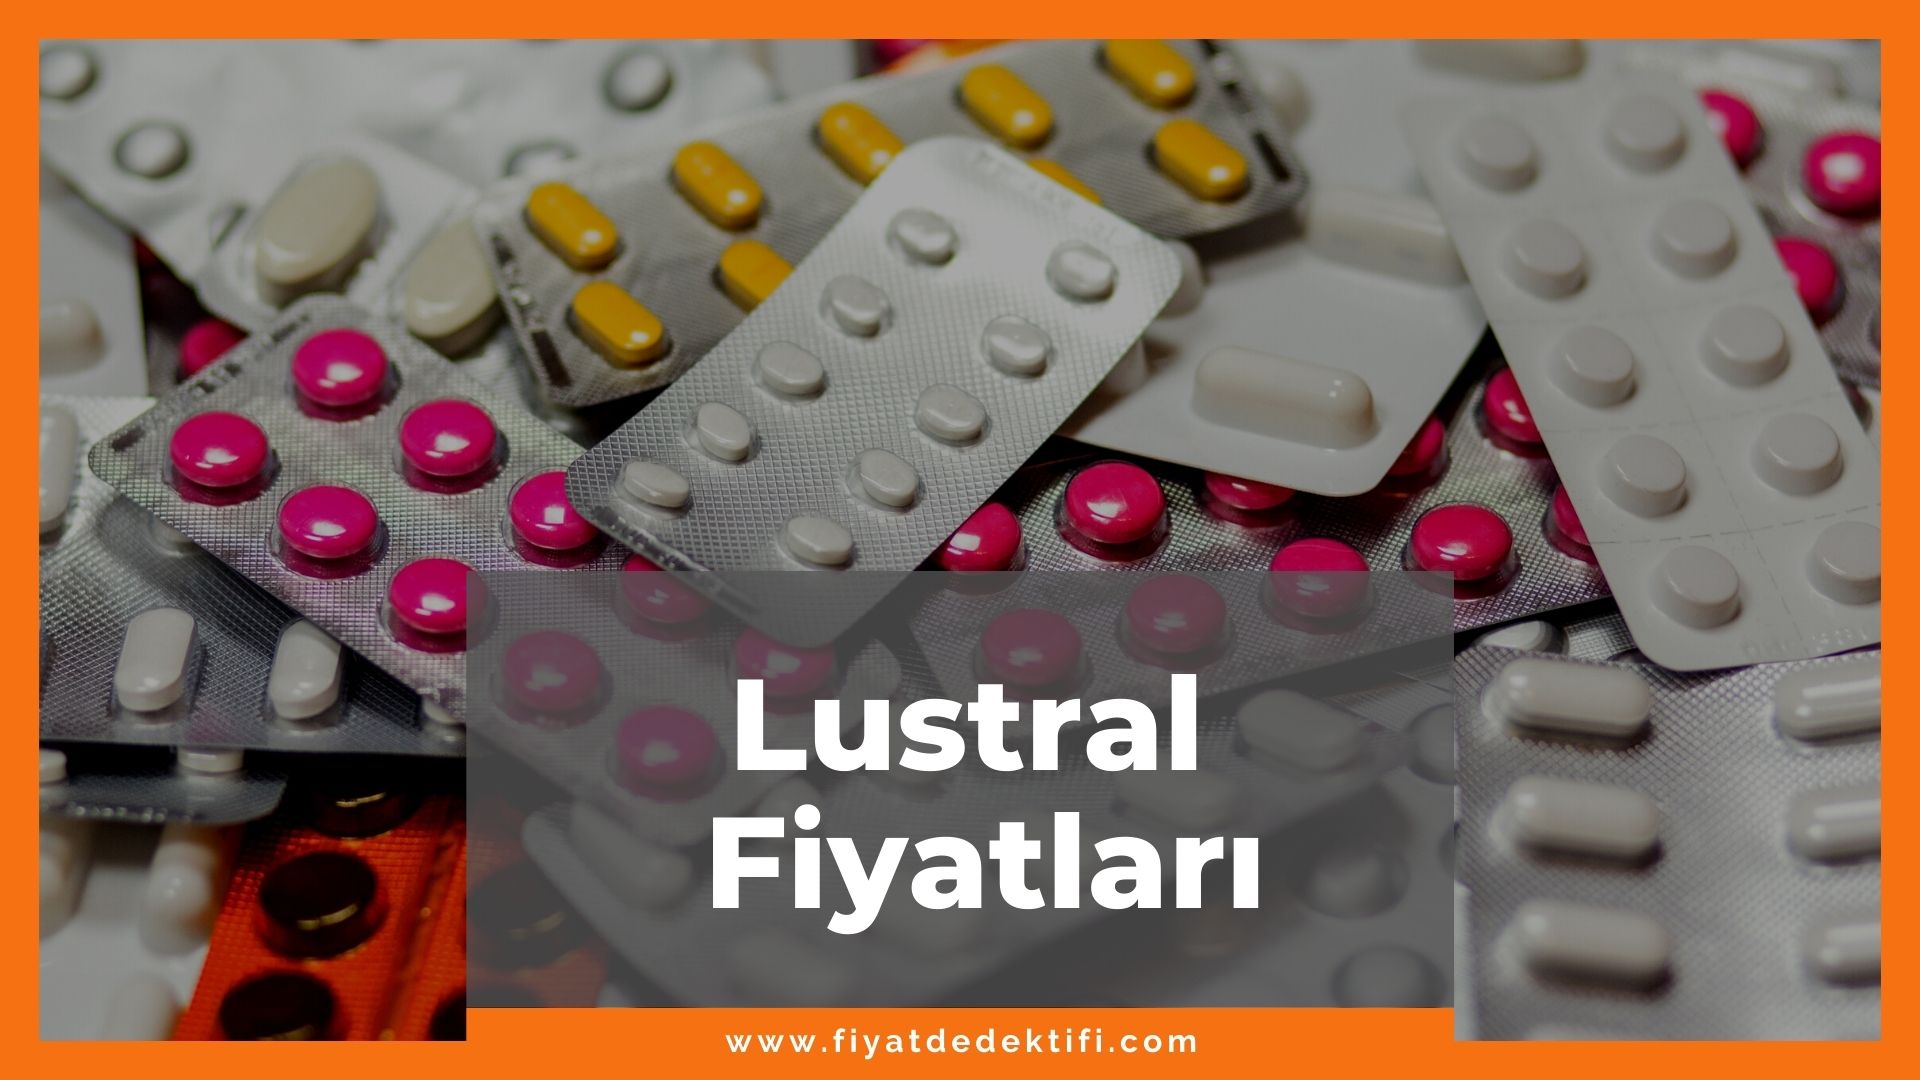 Lustral Fiyat 2021, Lustral Fiyatı, Lustral Antidepresan Fiyatı, lustral zamlandı mı, lustral zamlı fiyat ne kadar